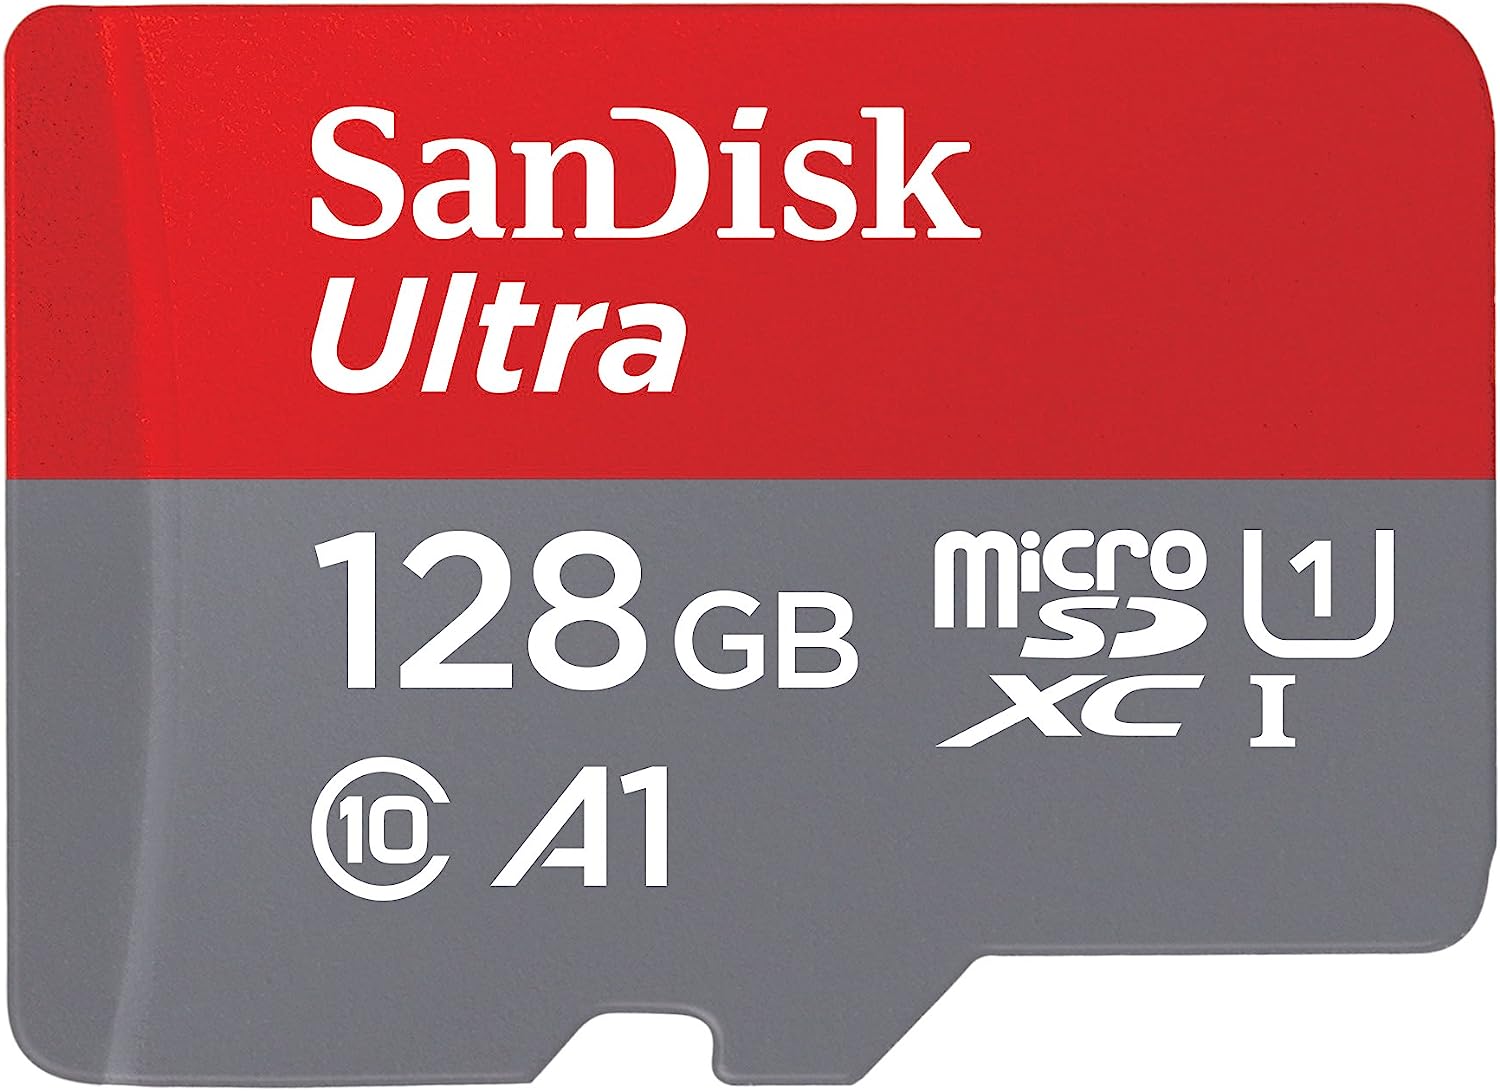 SanDisk Ultra UHS MicroSD Card 128GB